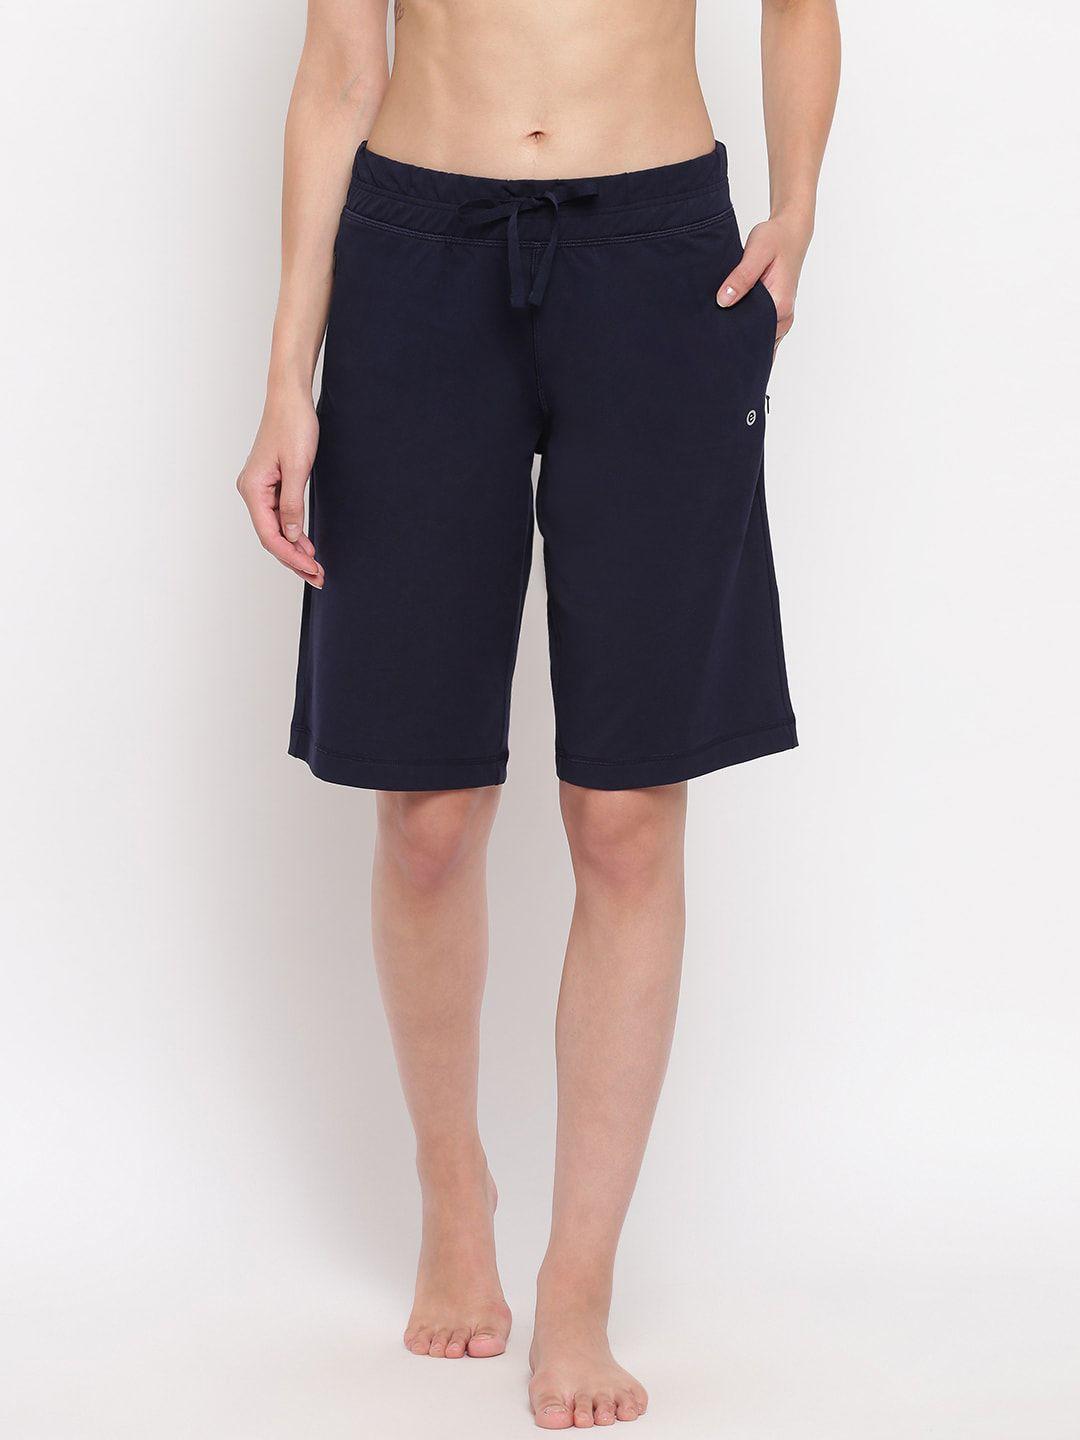 enamor women solid mid-rise cotton lounge shorts